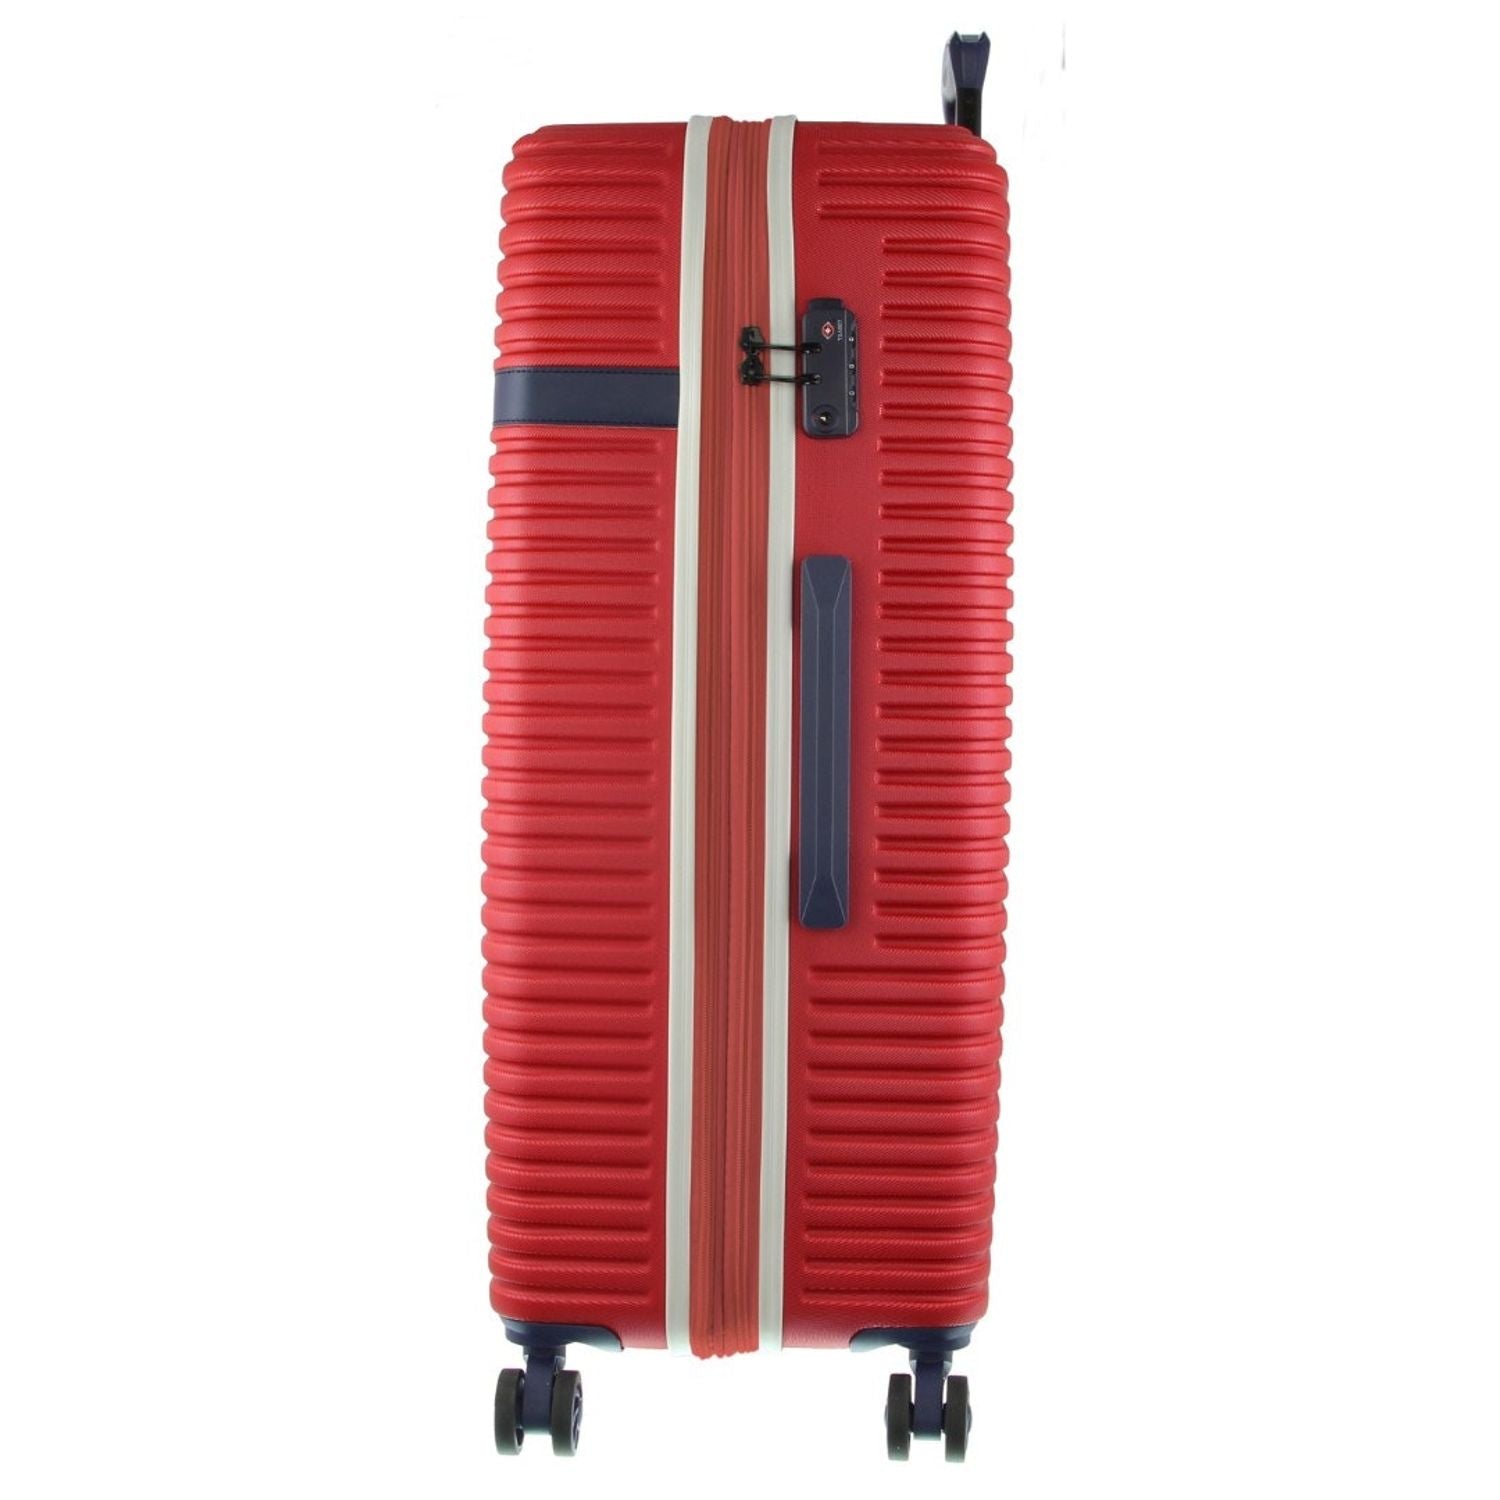 GAP 4 Wheel Hardcase Suitcase - Cabin Red